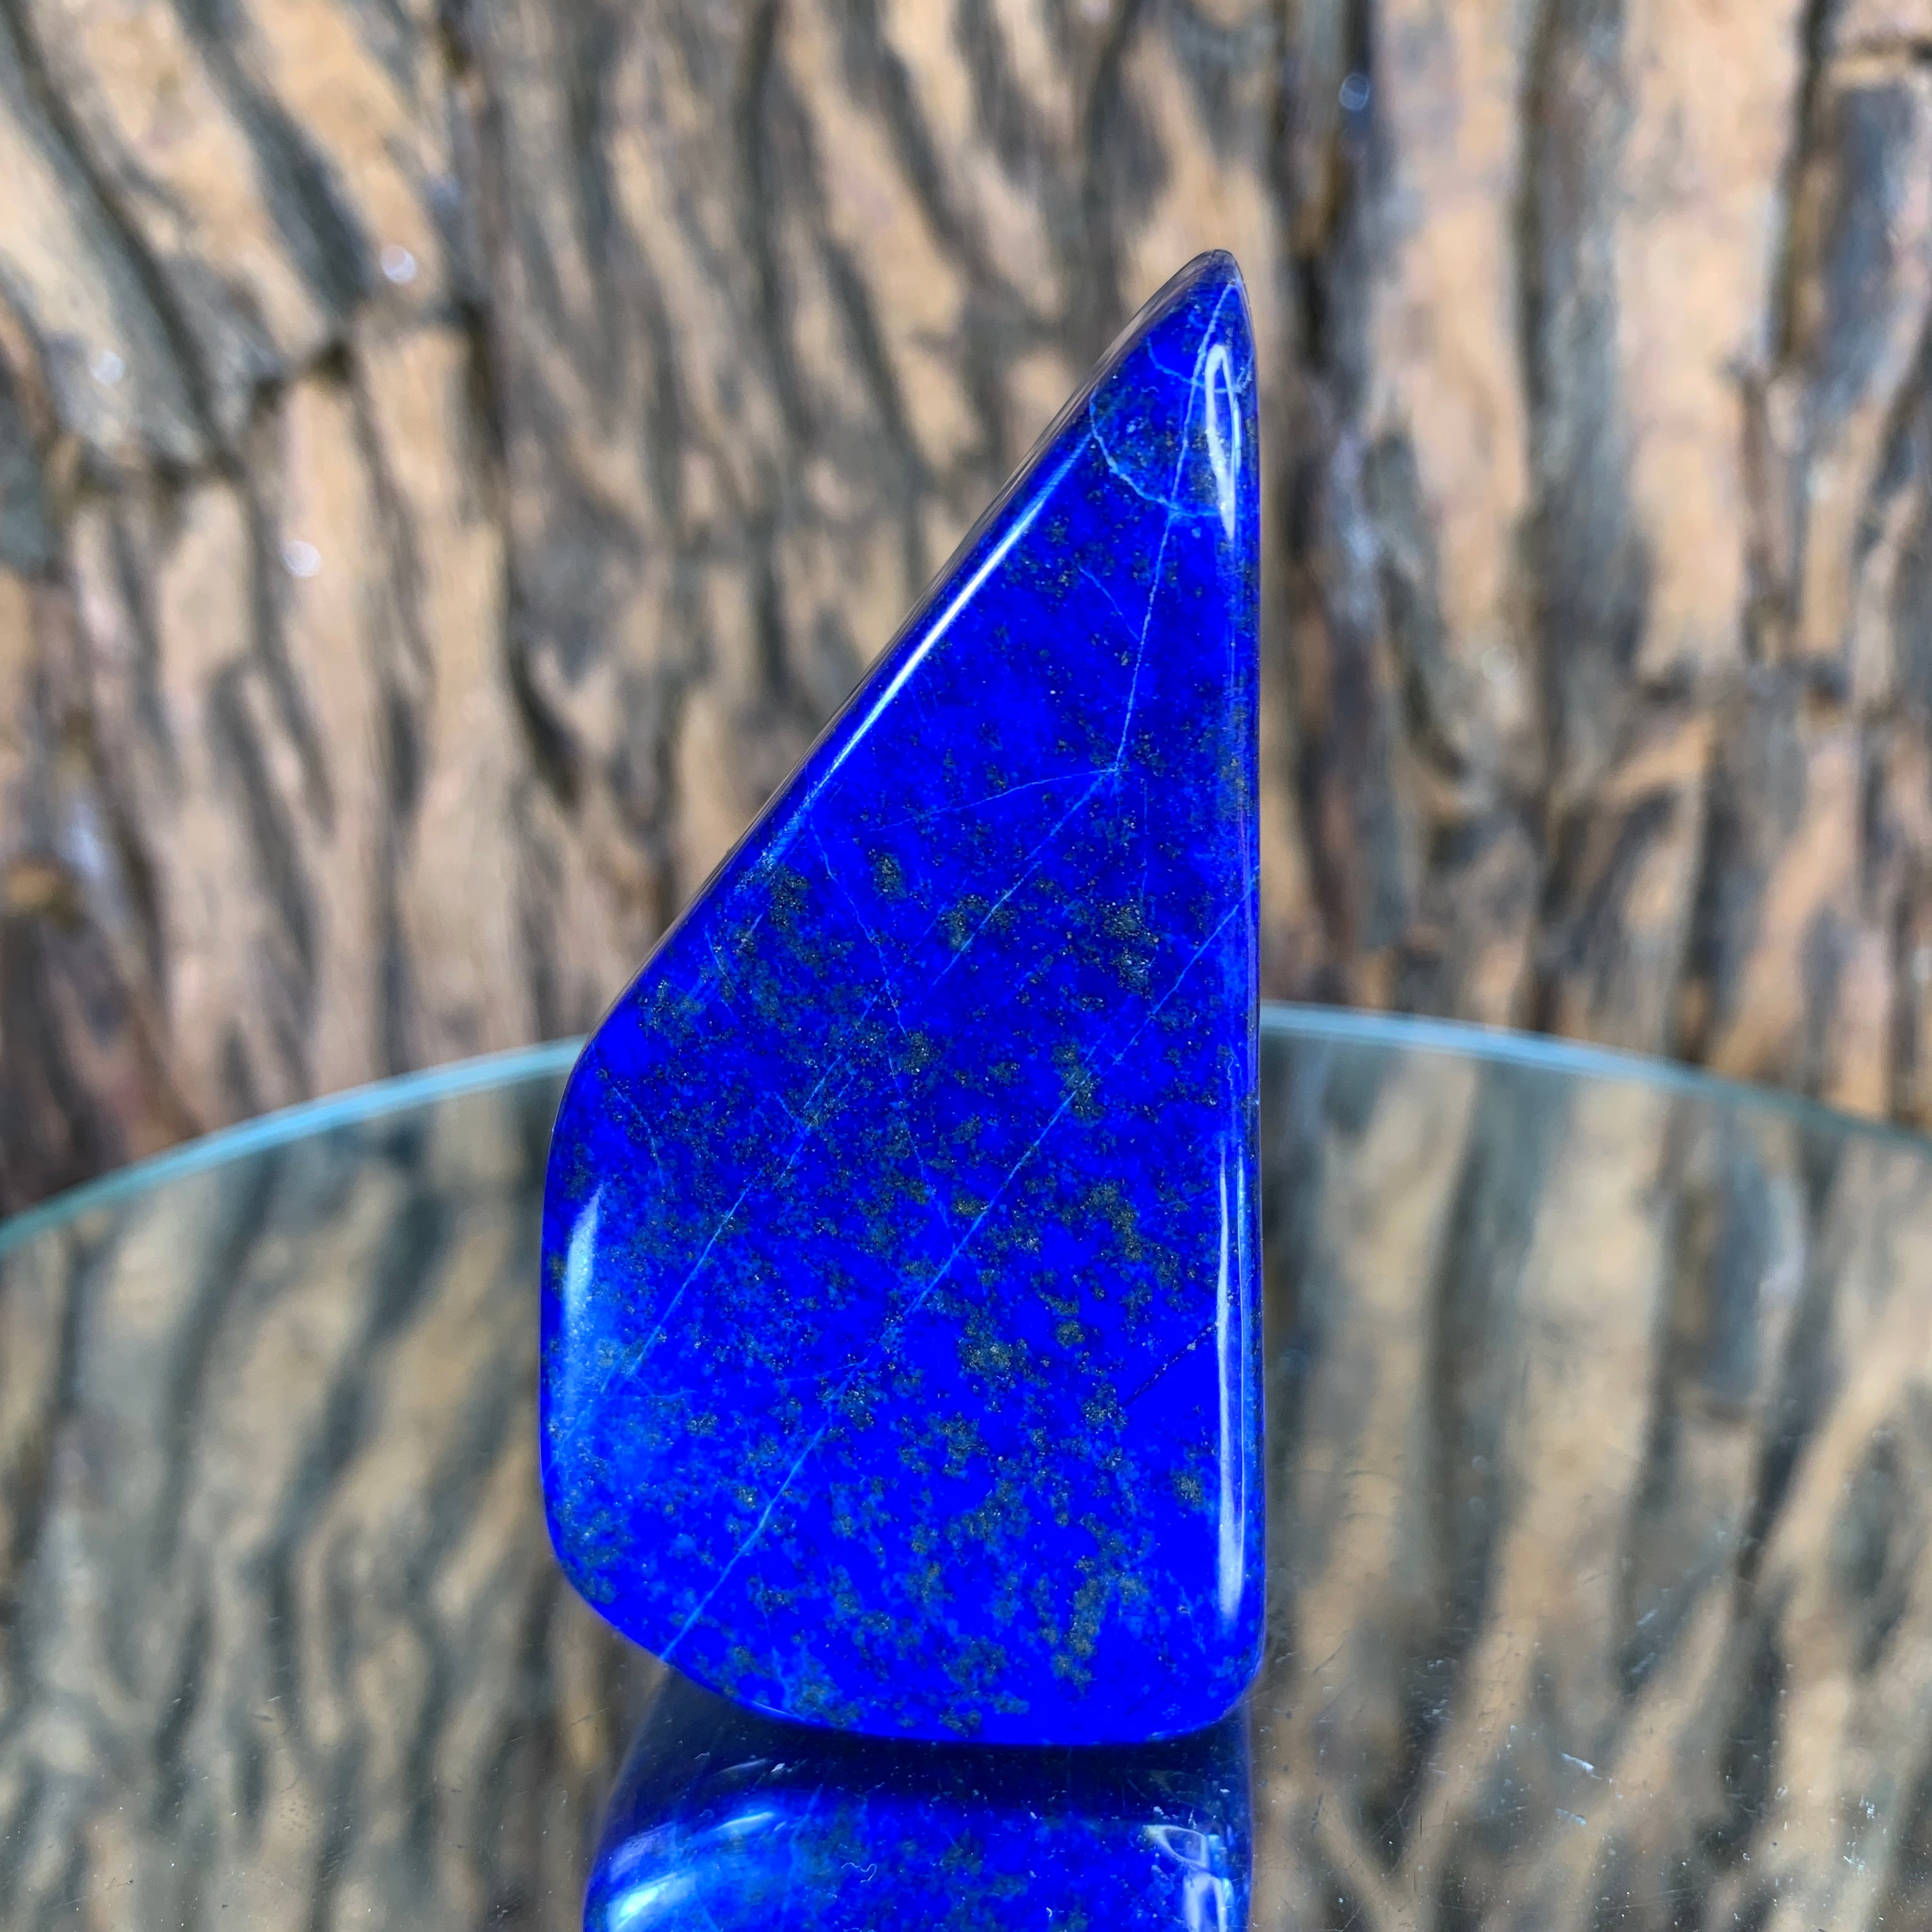 208.0g 8x4x4cm Dark Blue Lapis Lazuli Natural Shape from Afghanistan